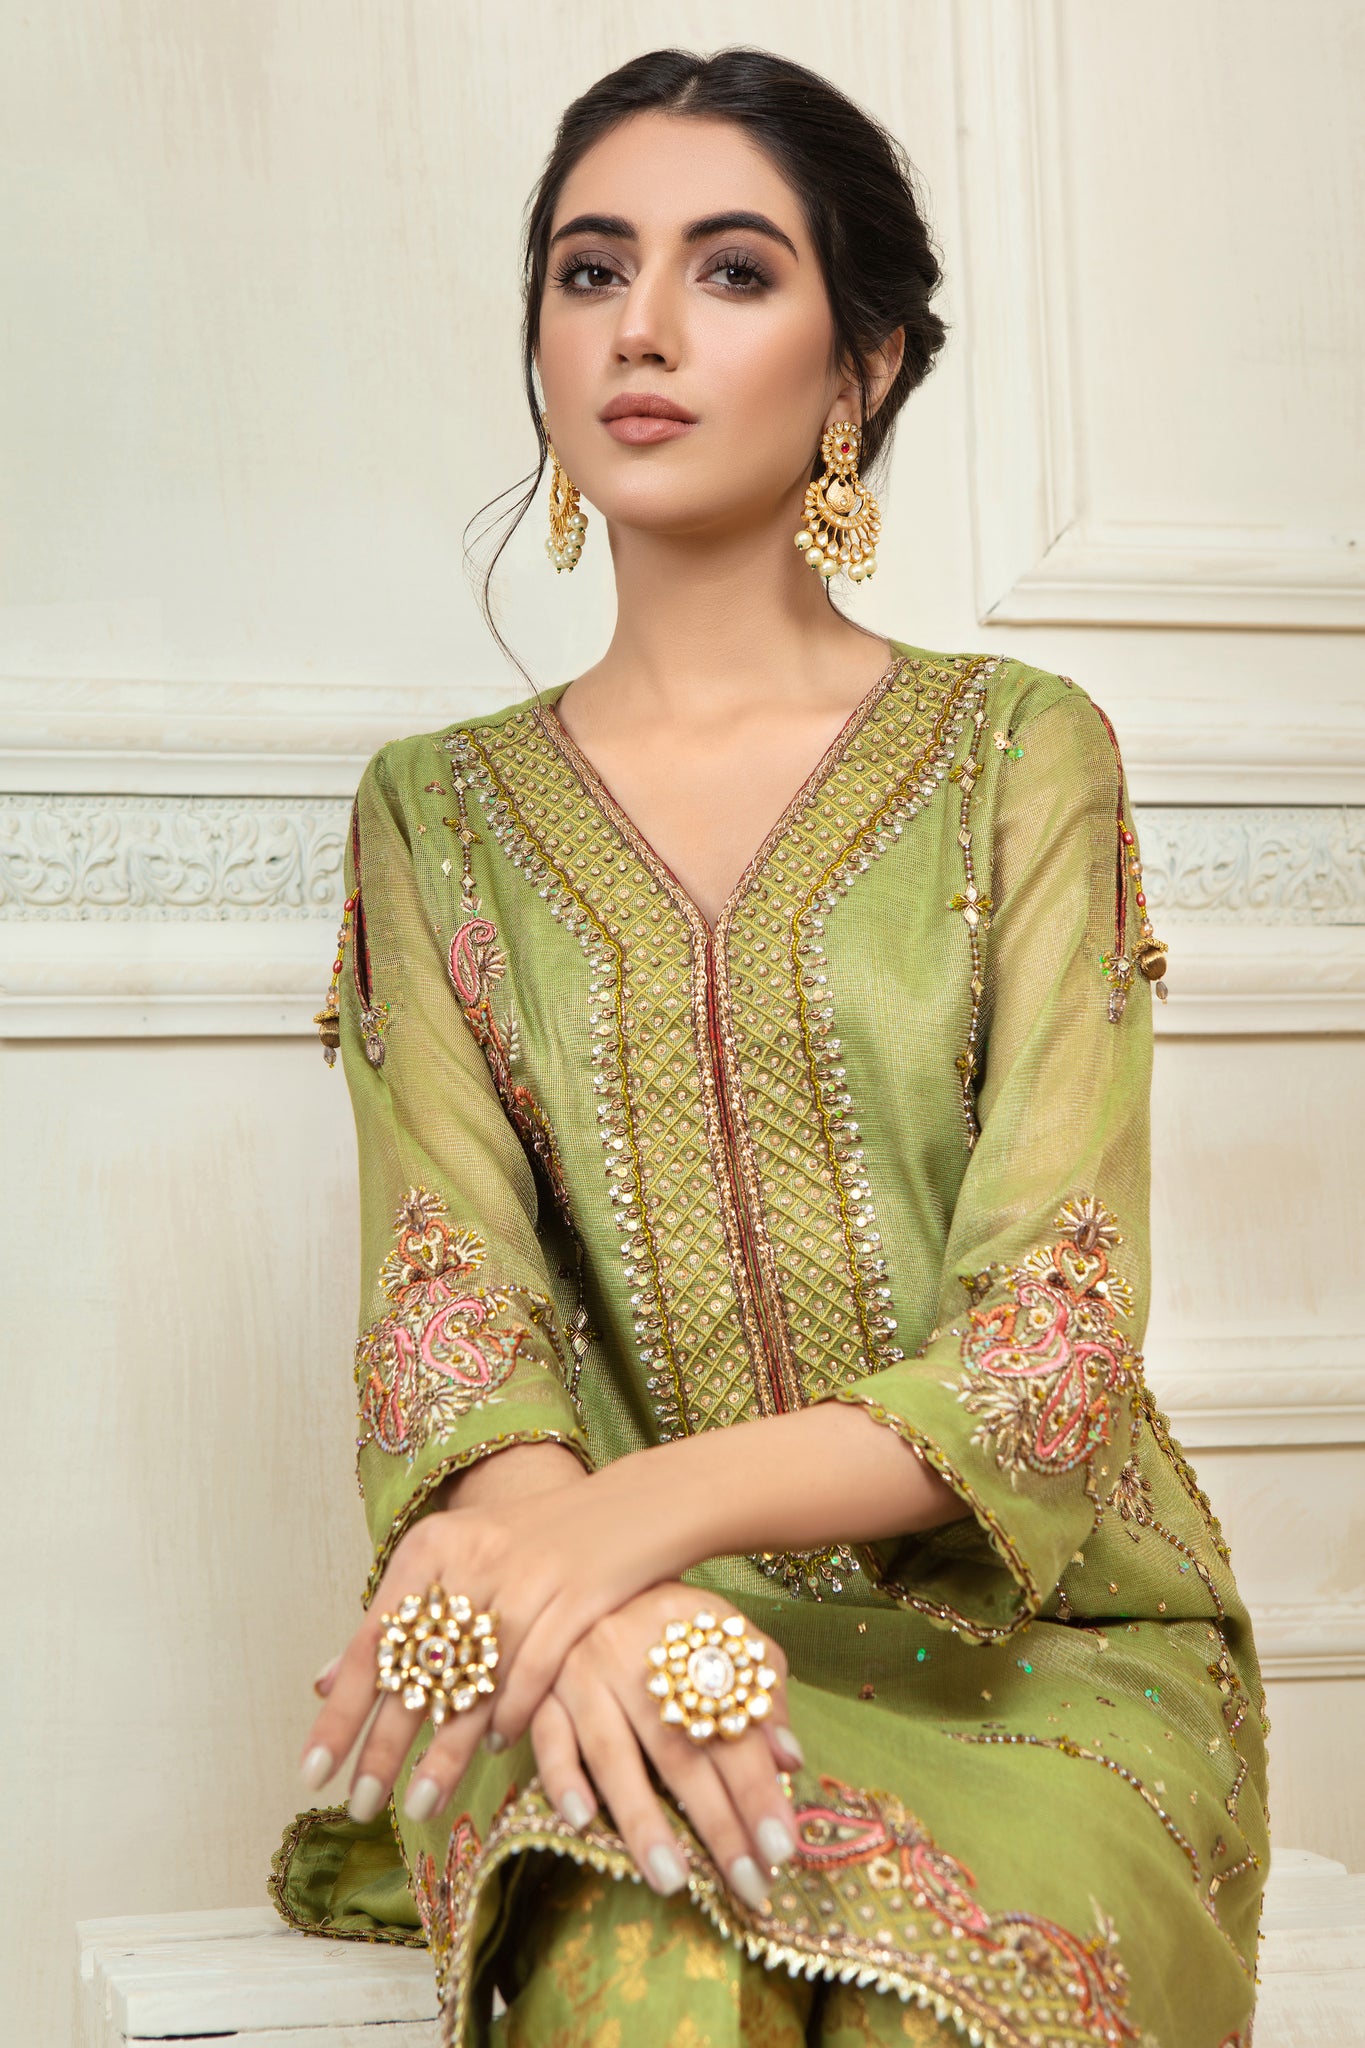 Finnah | Pakistani Designer Outfit | Sarosh Salman